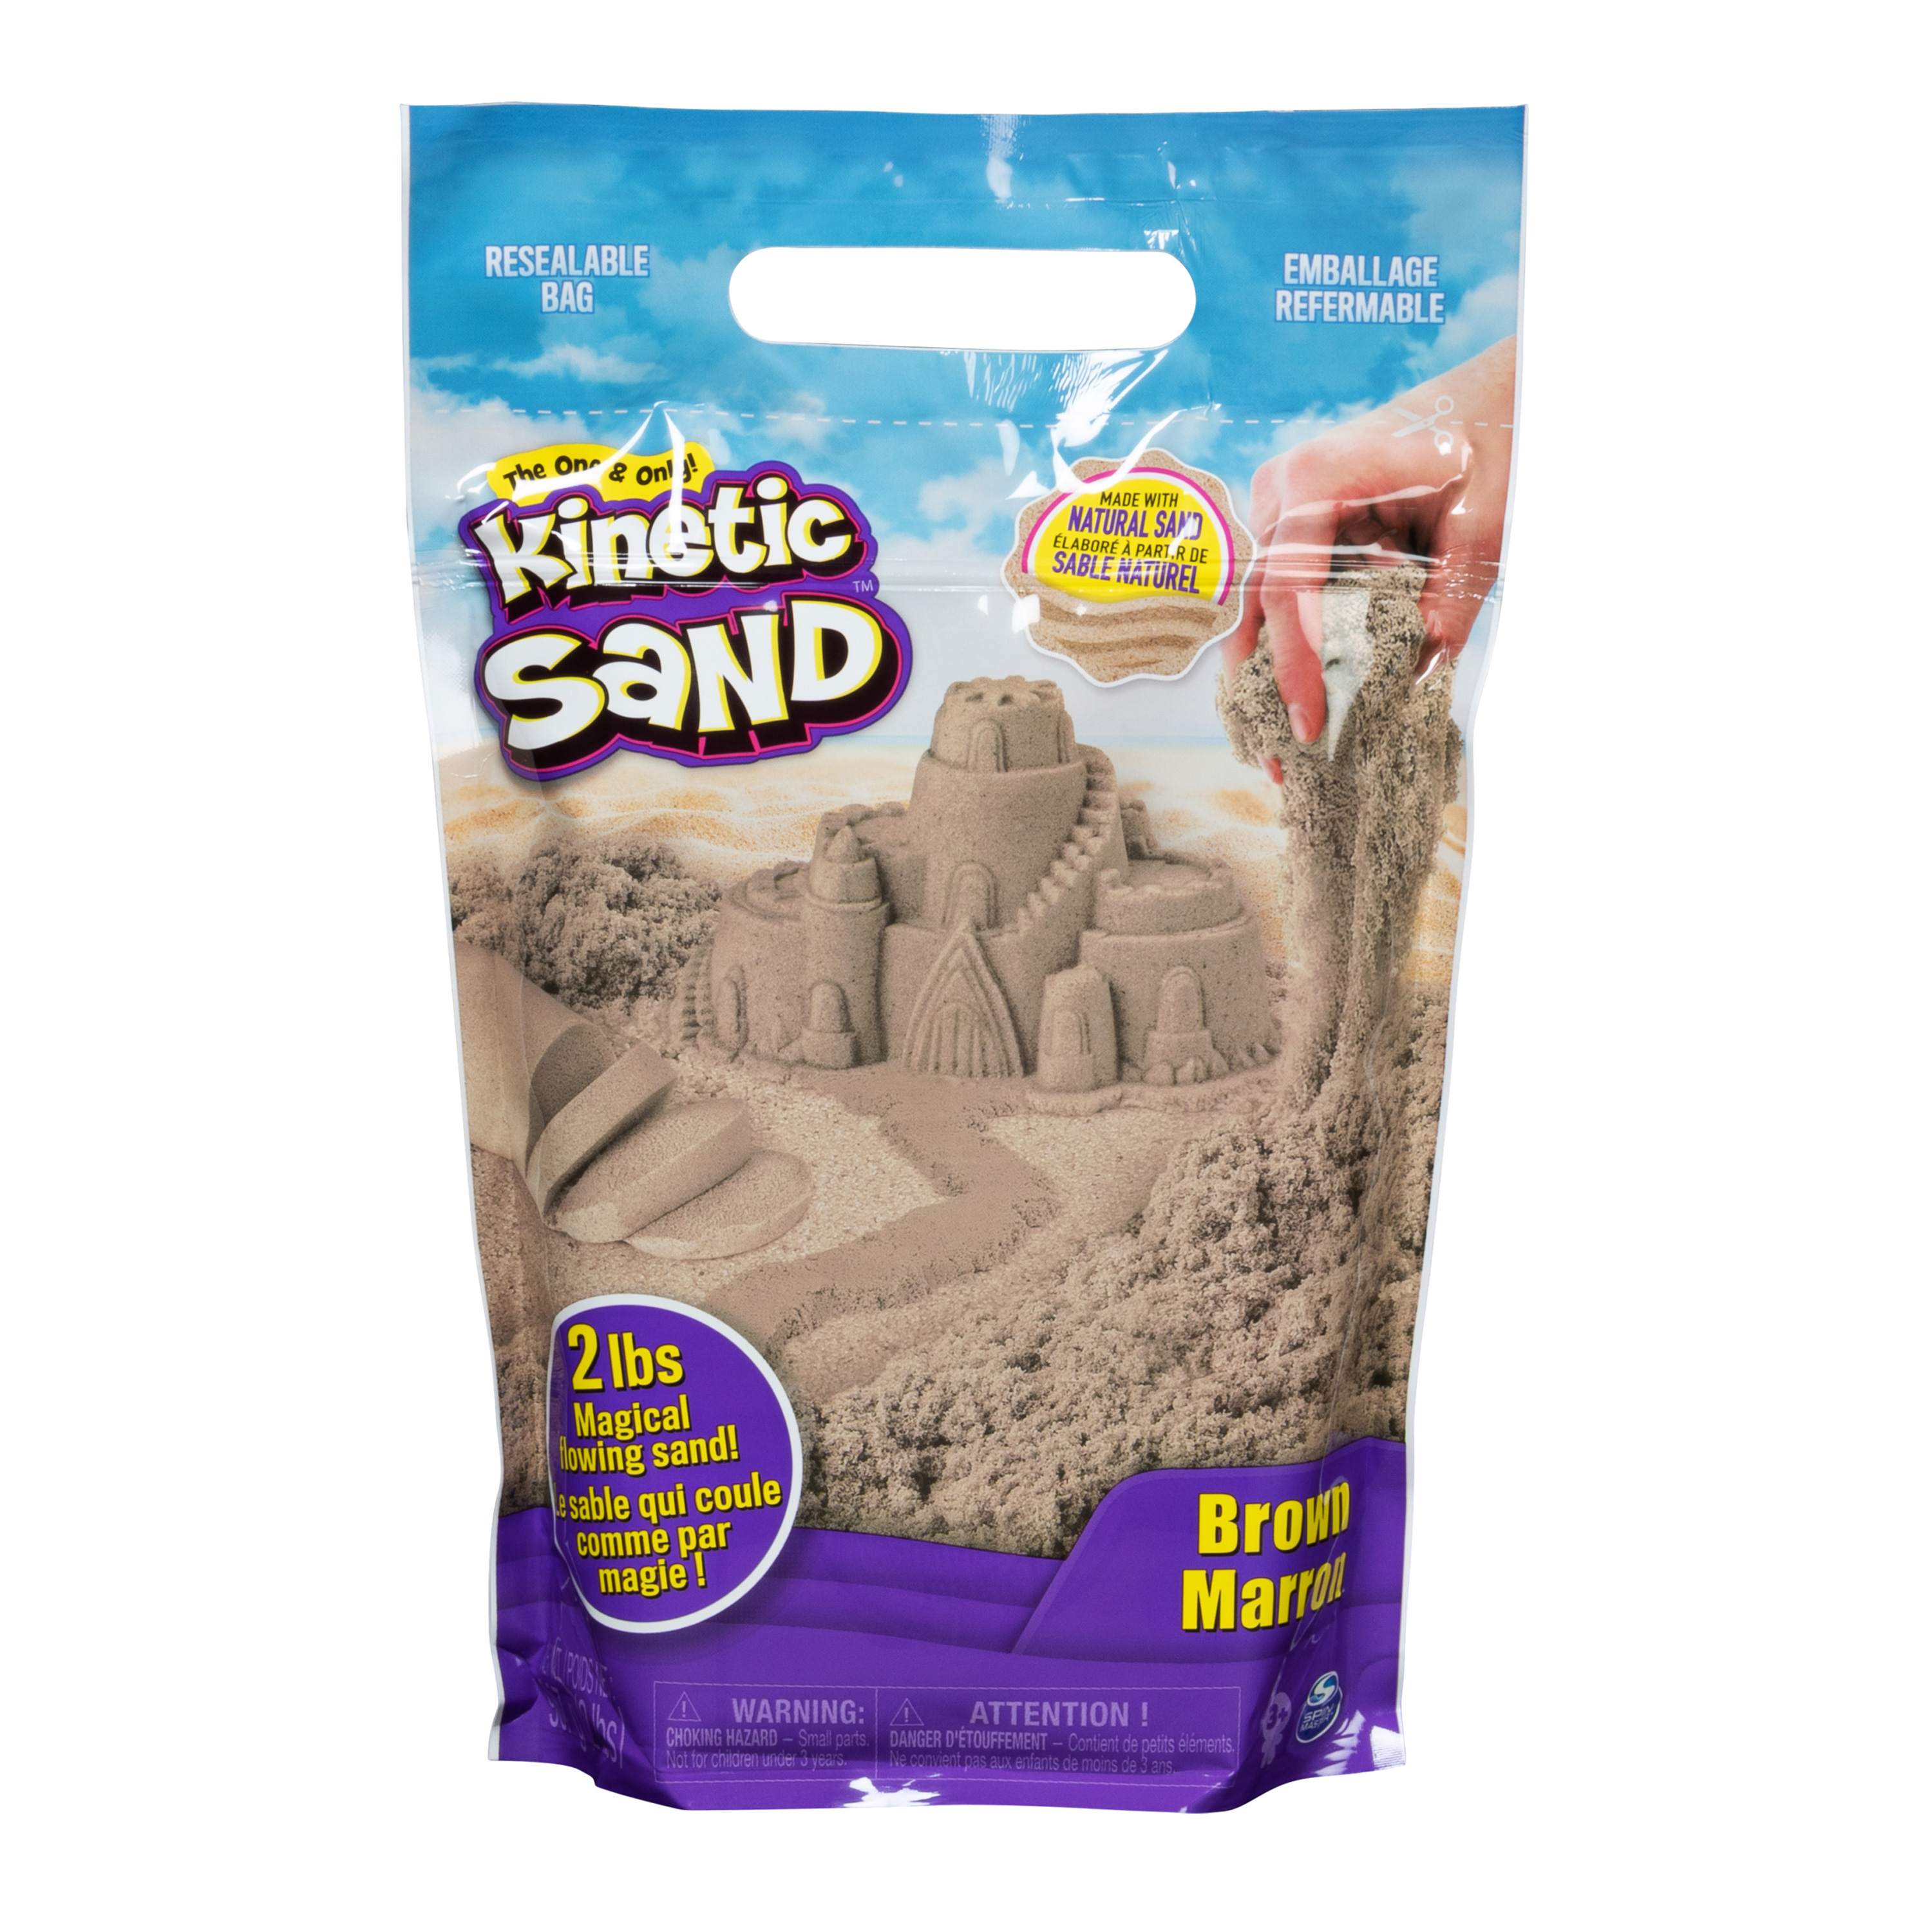 Kinetic Sand 'Color - braun', 0,9 kg Beutel